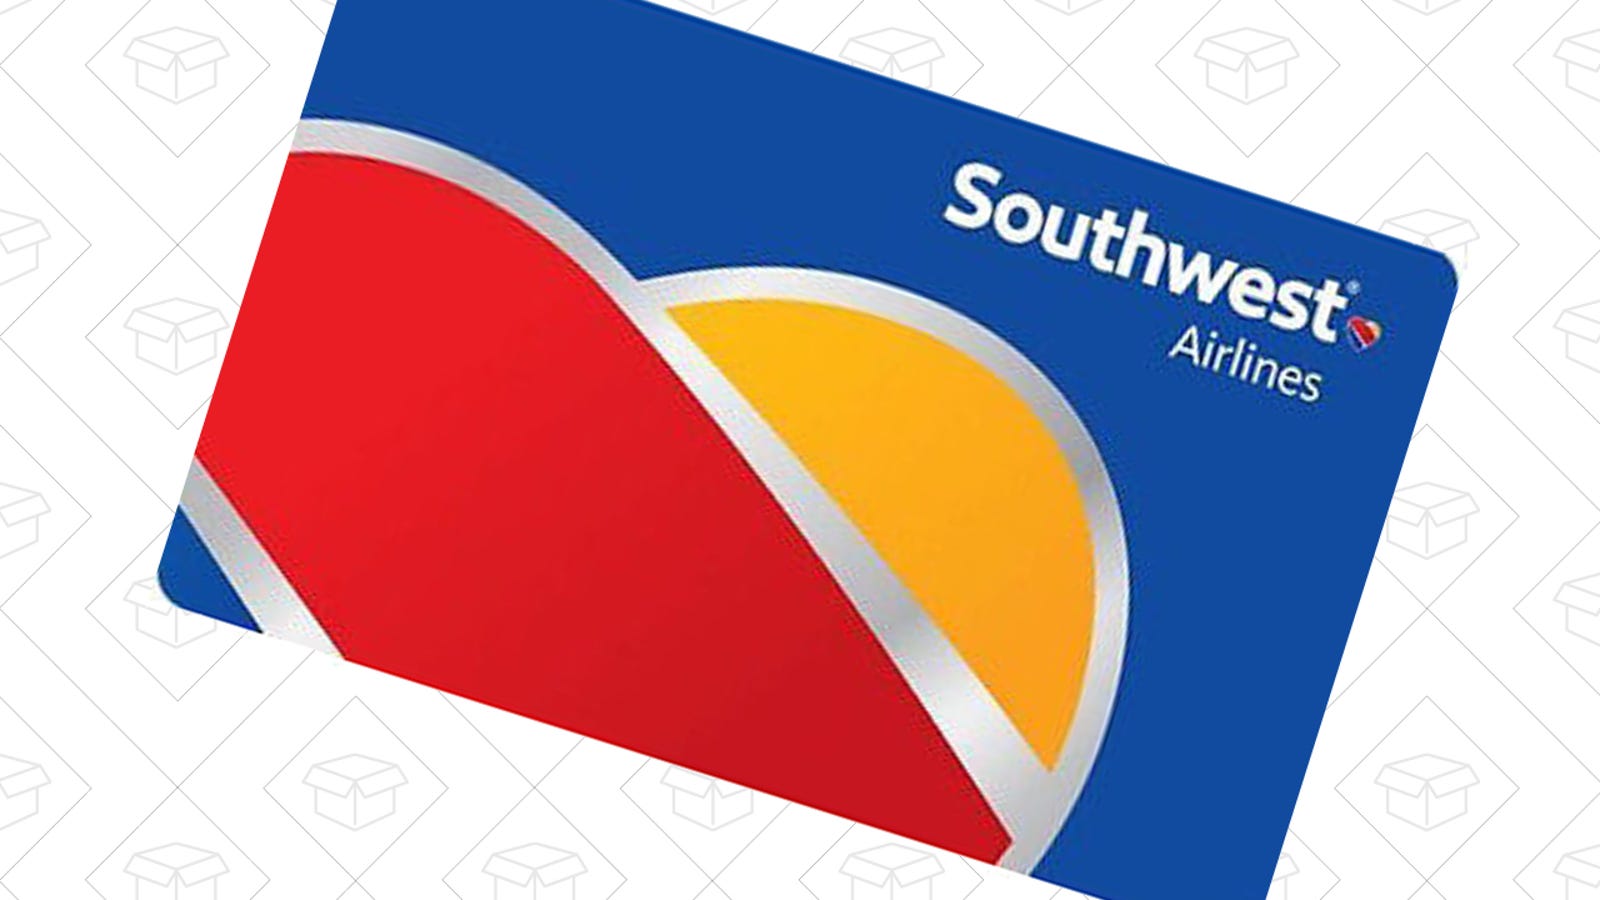 southwest gift card deals